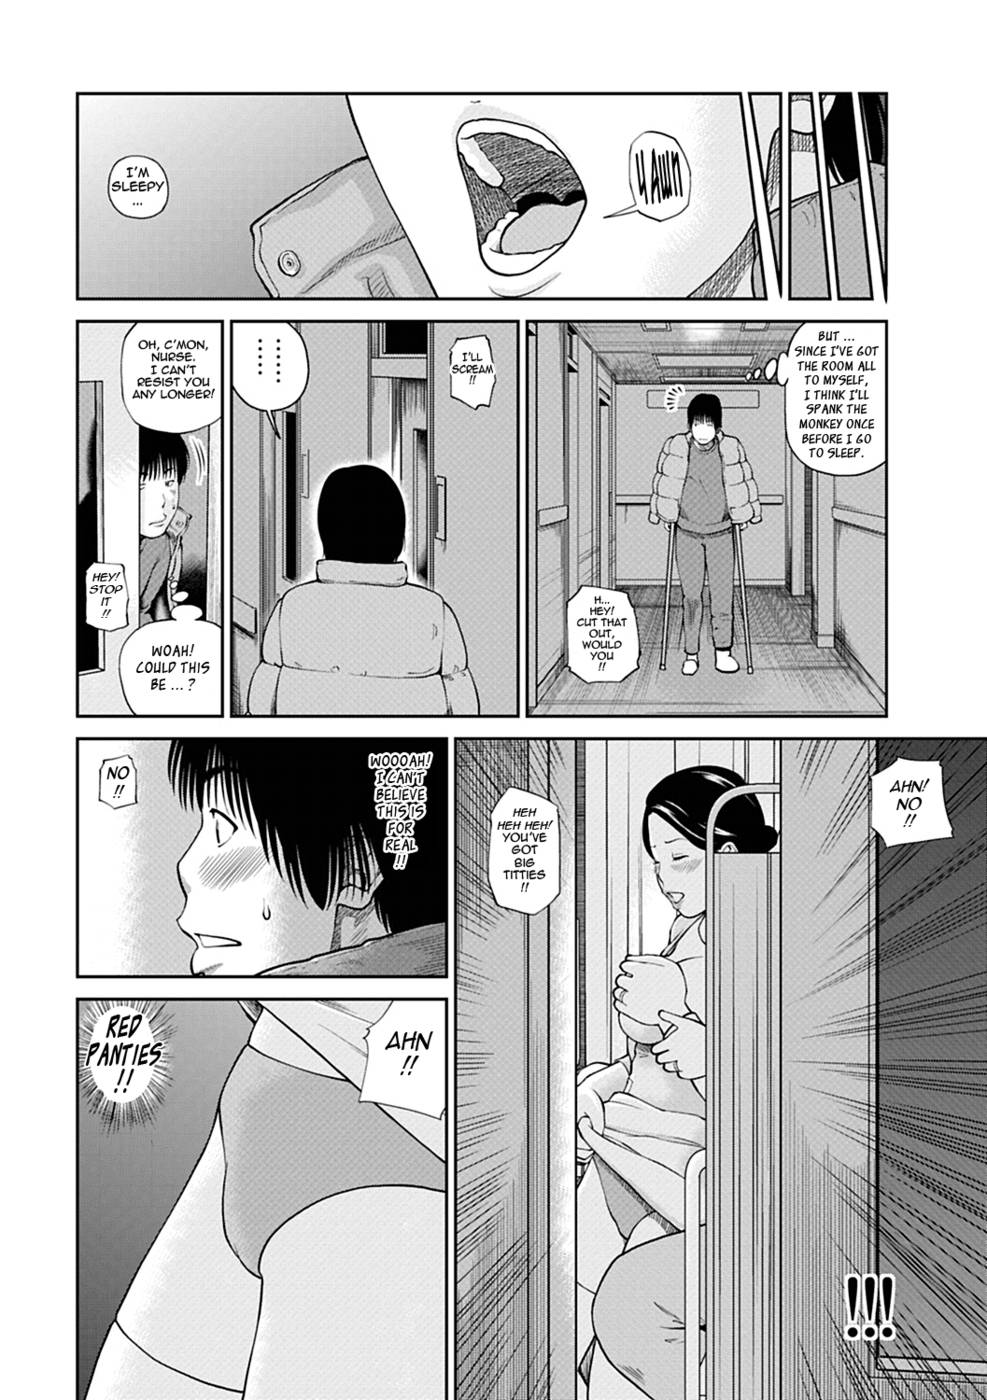 Hentai Manga Comic-34 Year Old Unsatisfied Wife-Chapter 5-Married Nurse-4